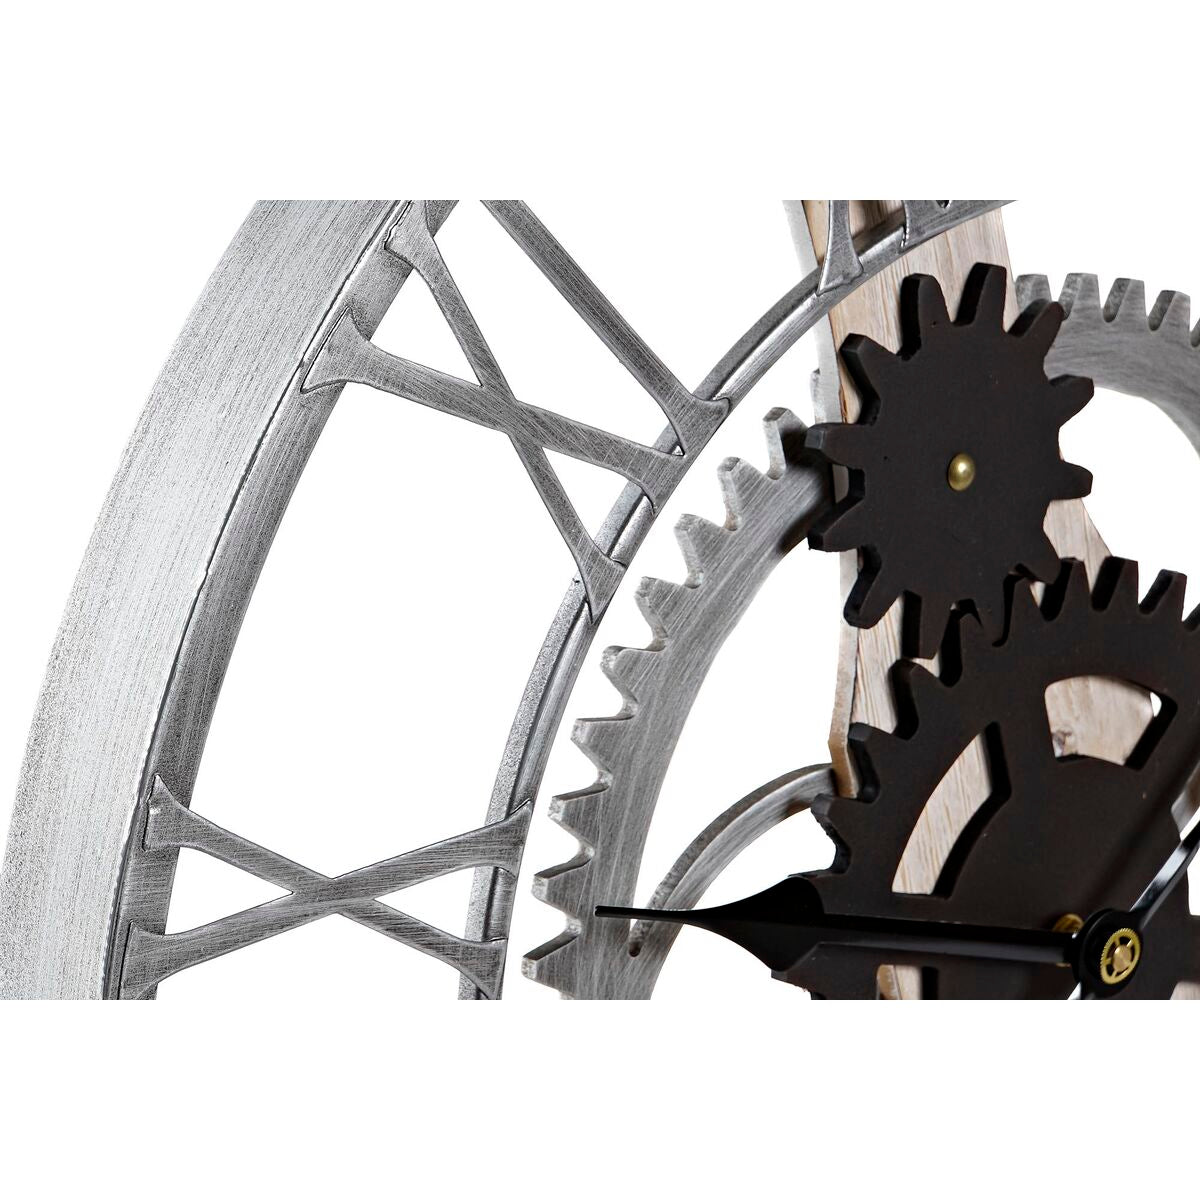 Steampunk Timepiece 60 x 4 x 60 cm